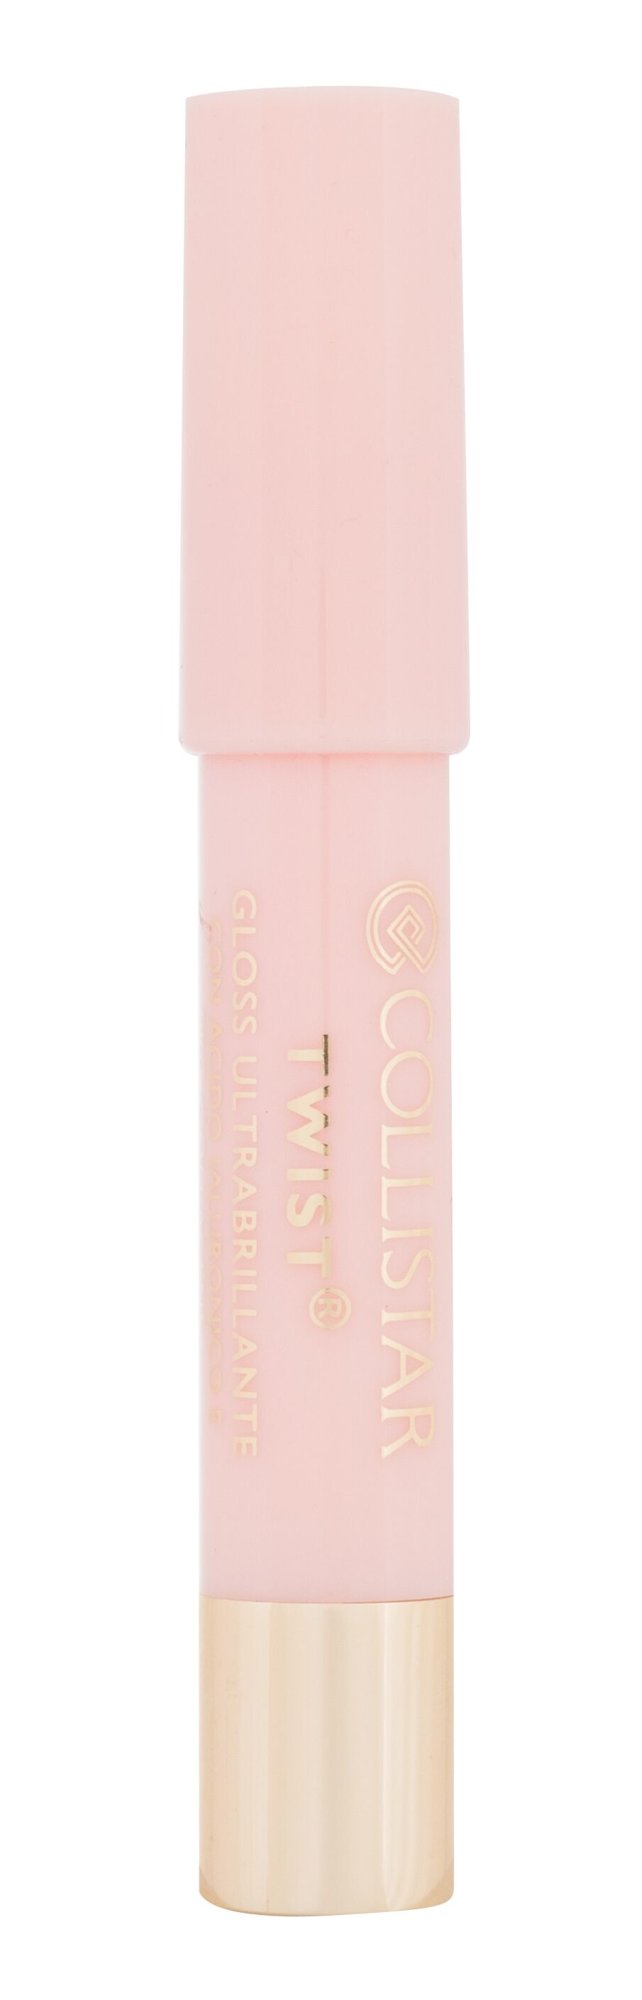 Collistar Twist Ultra-Shiny Gloss 4g lūpų blizgesys Testeris